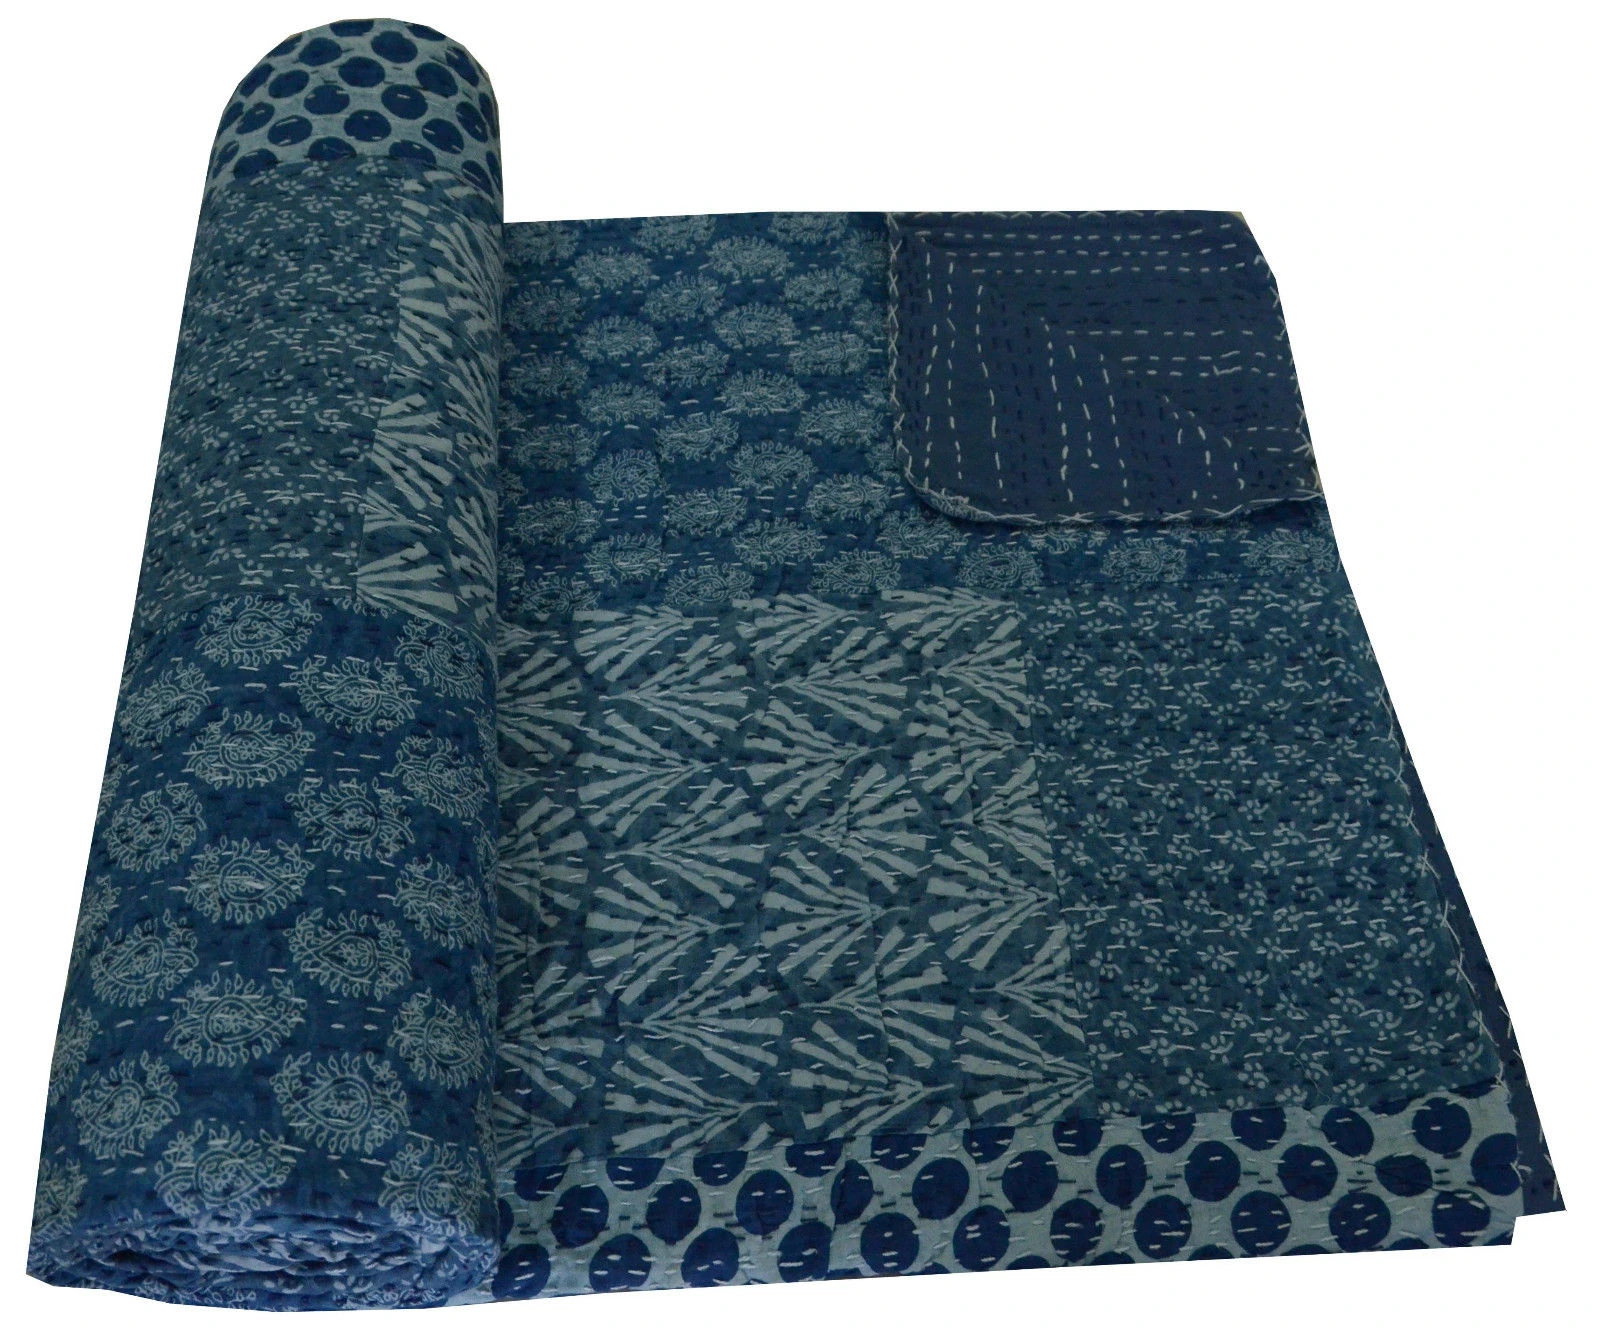 Indian Vintage Hand Stitched Patchwork Kantha Quilt 100% Cotton Gudri Blanket Block Printed Kantha Indigo Blue Bedspread